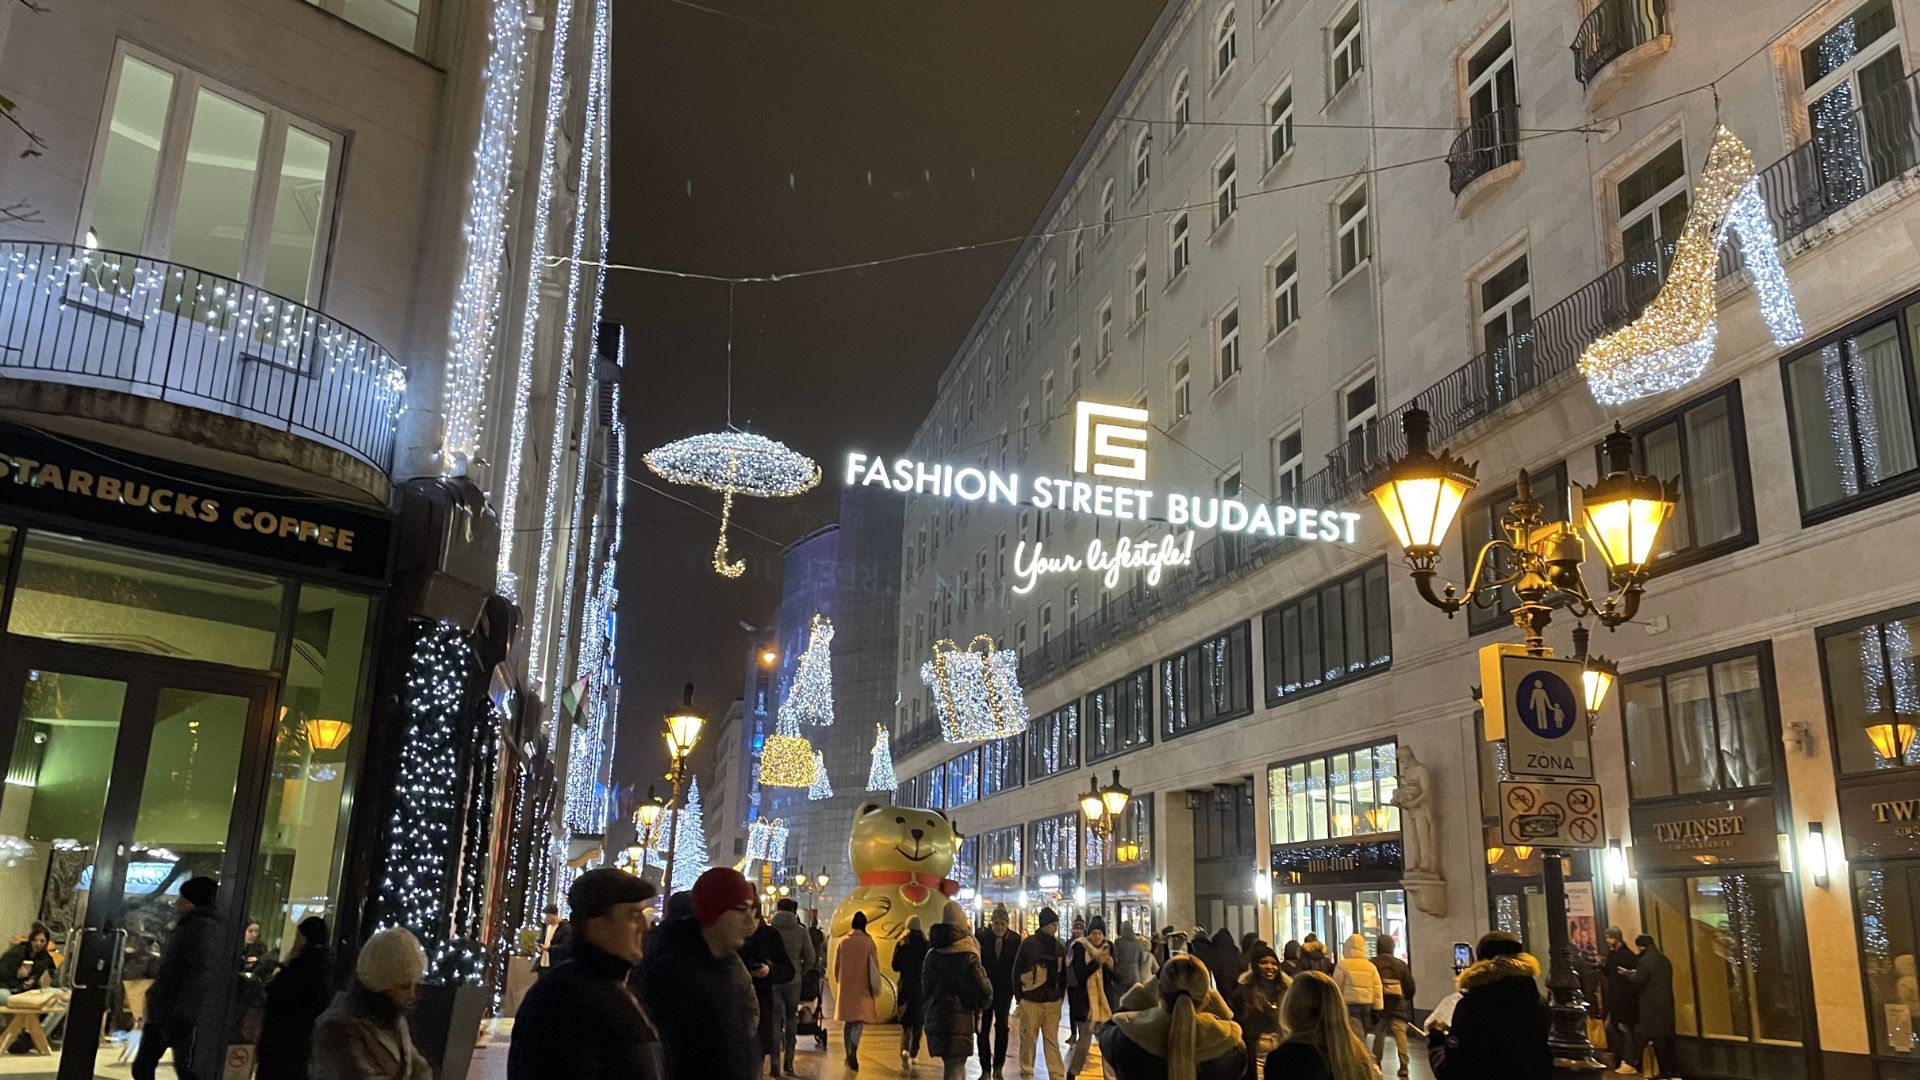 Fashion Street at Christmas